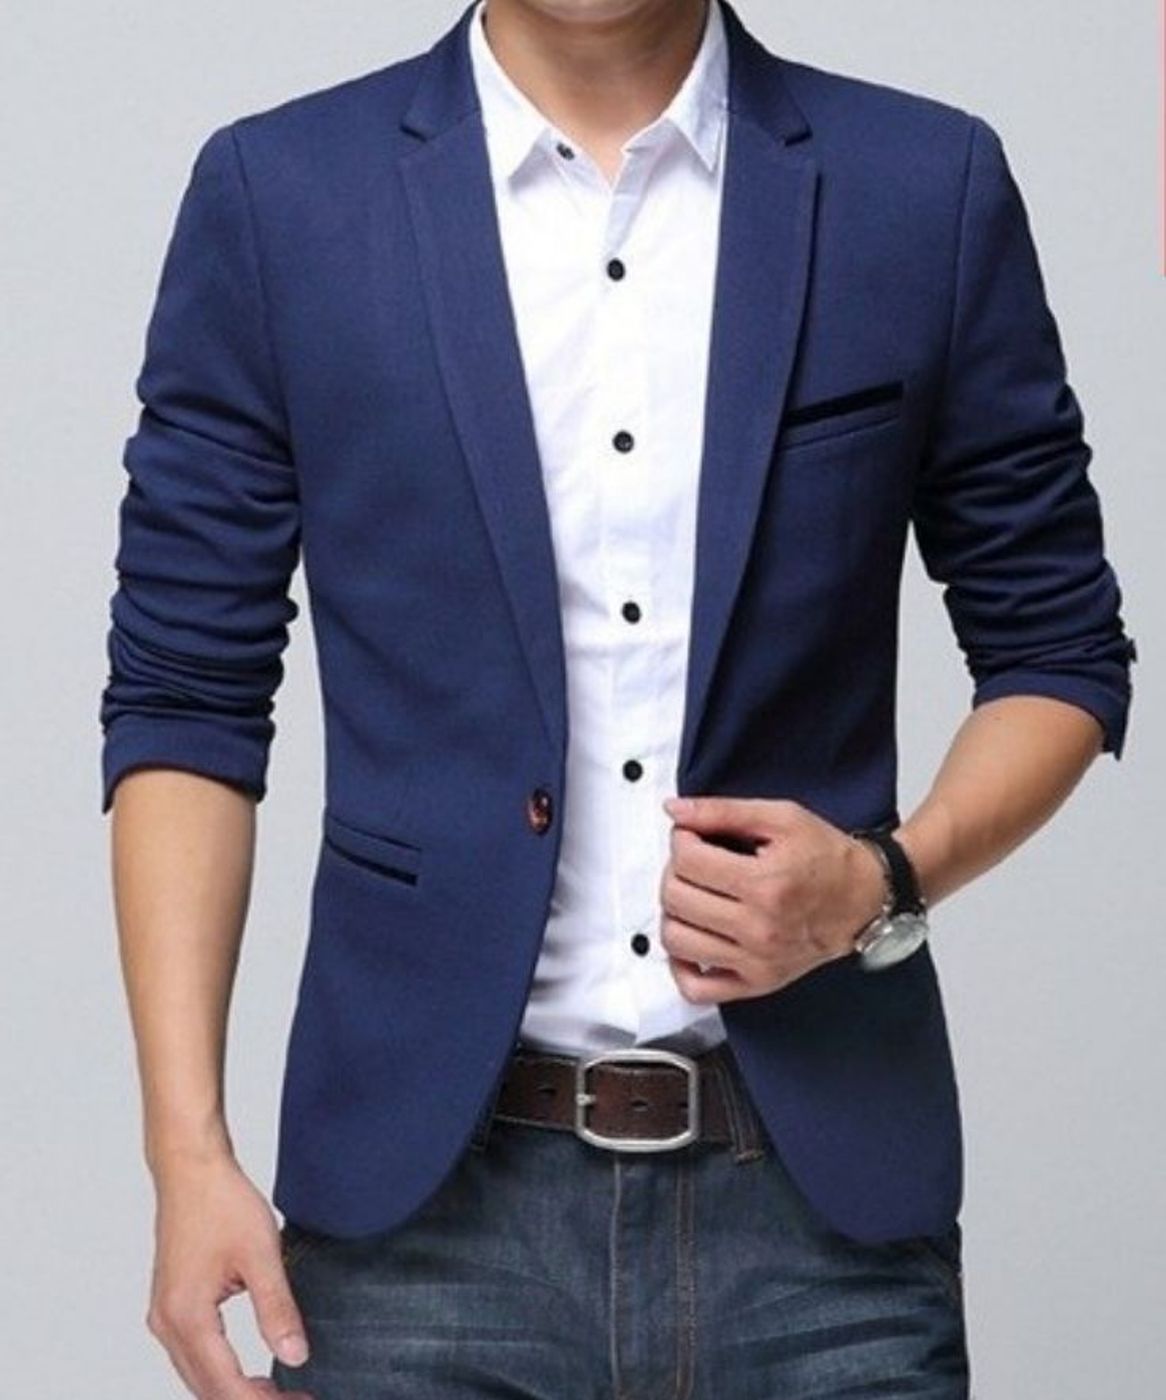 Buy Men's Royal Blue Slim Fit Blazer Online @ ₹2498 from ShopClues